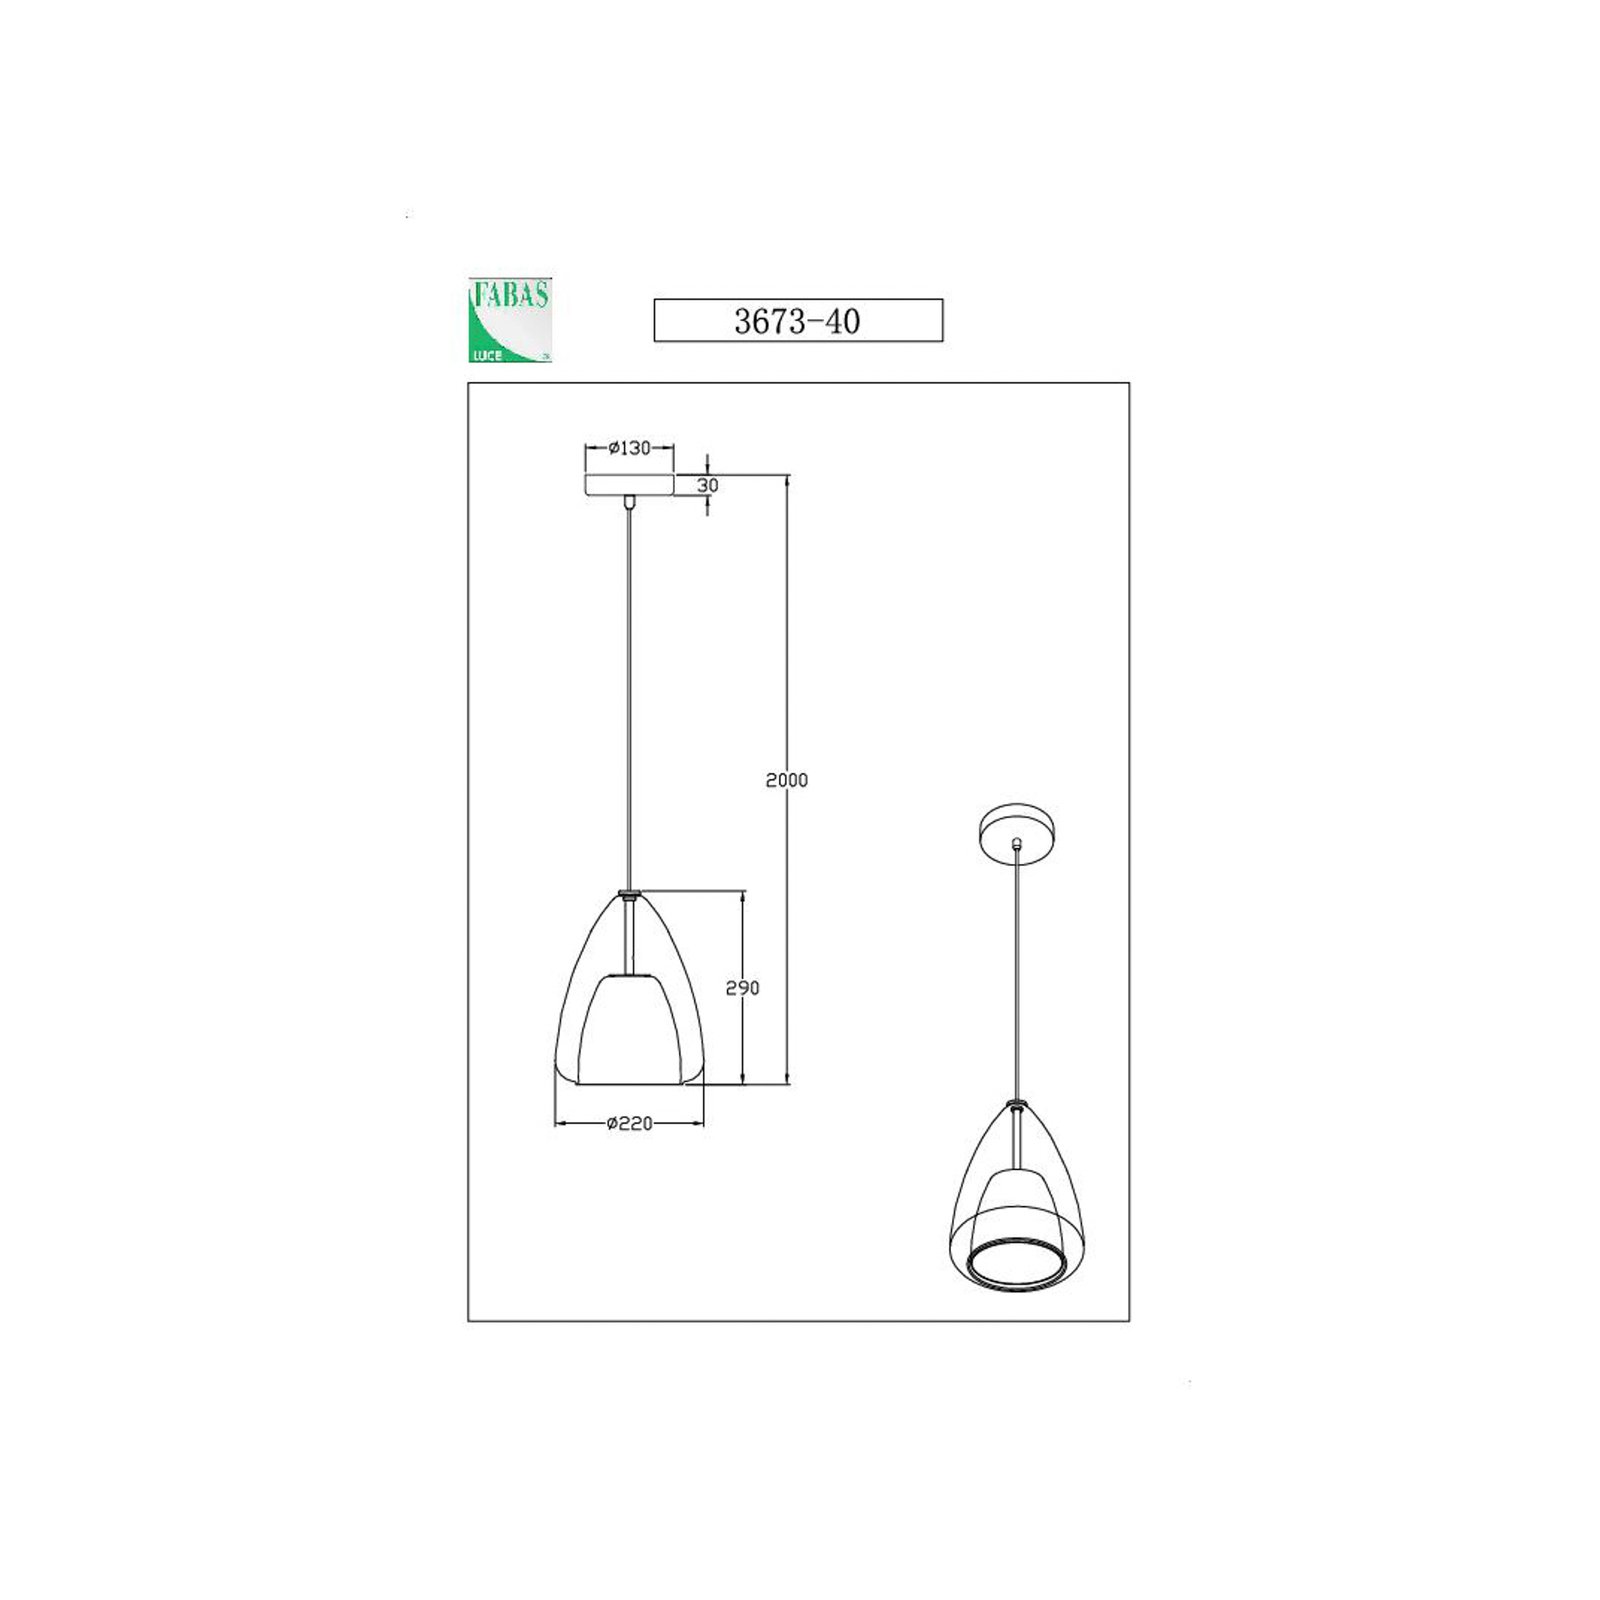 Britton hanglamp, 1-lamp, grijs-transparant, glas